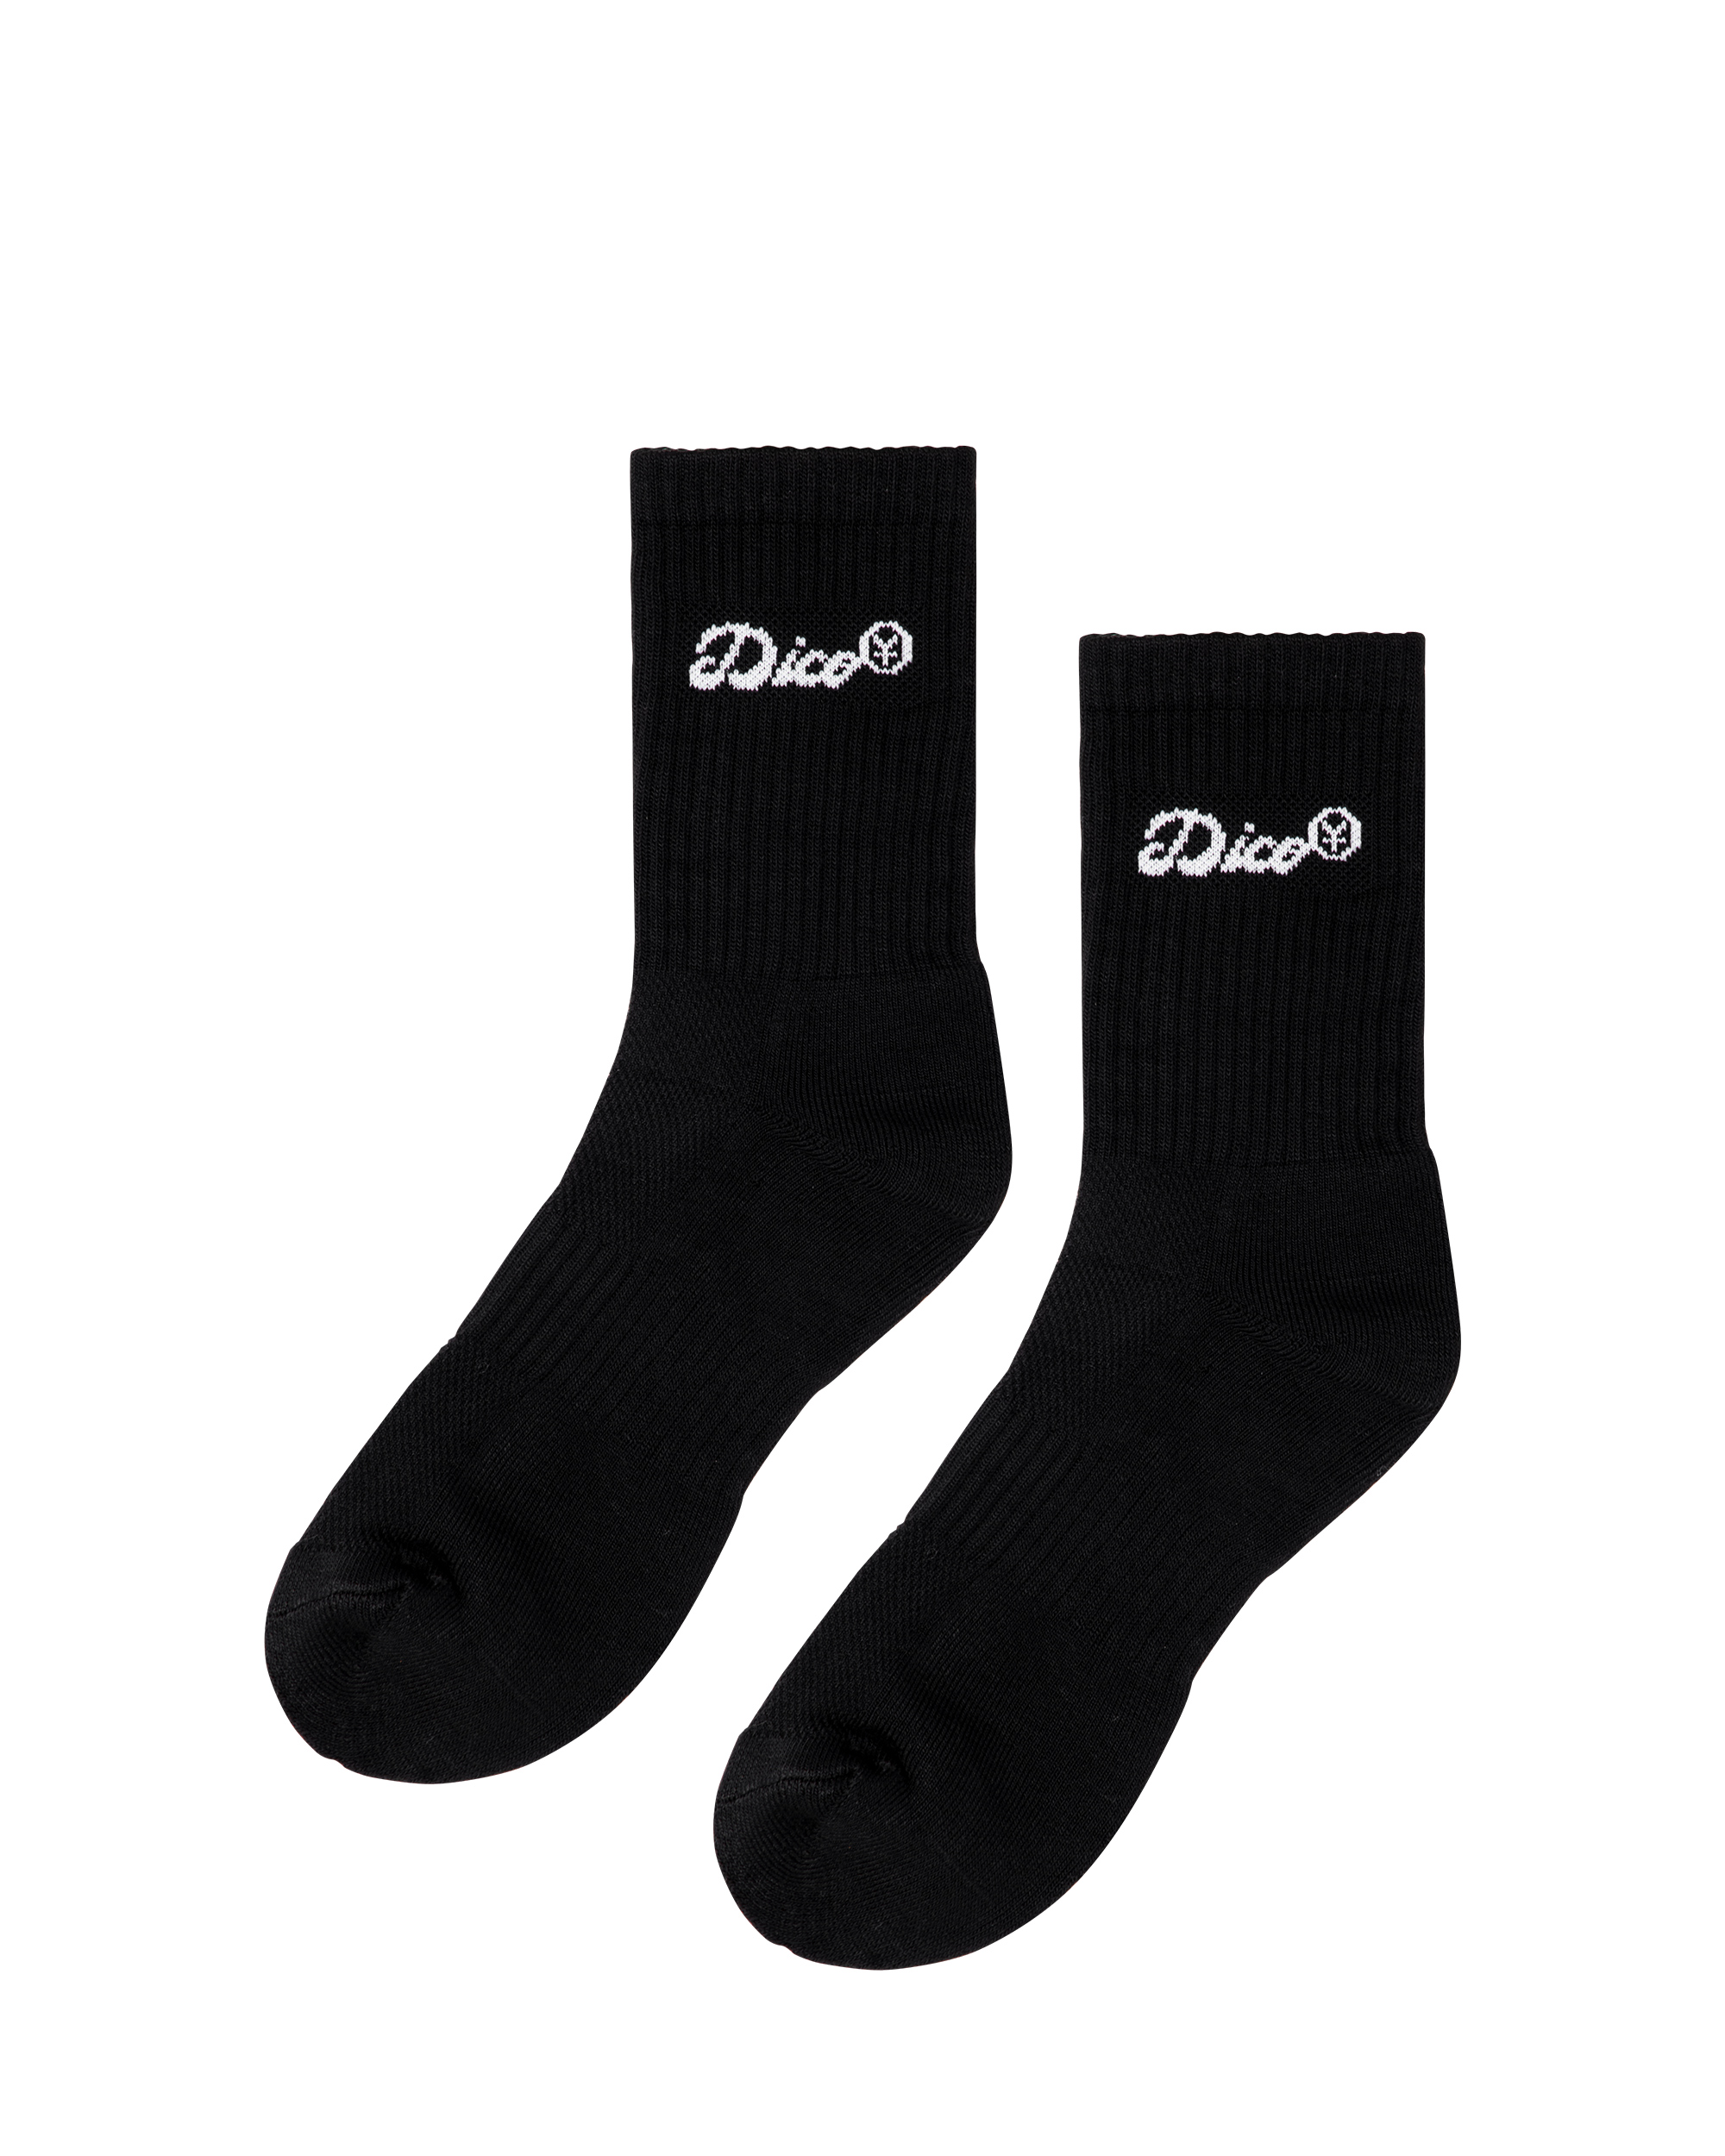 Dico Comfy Socks - Black